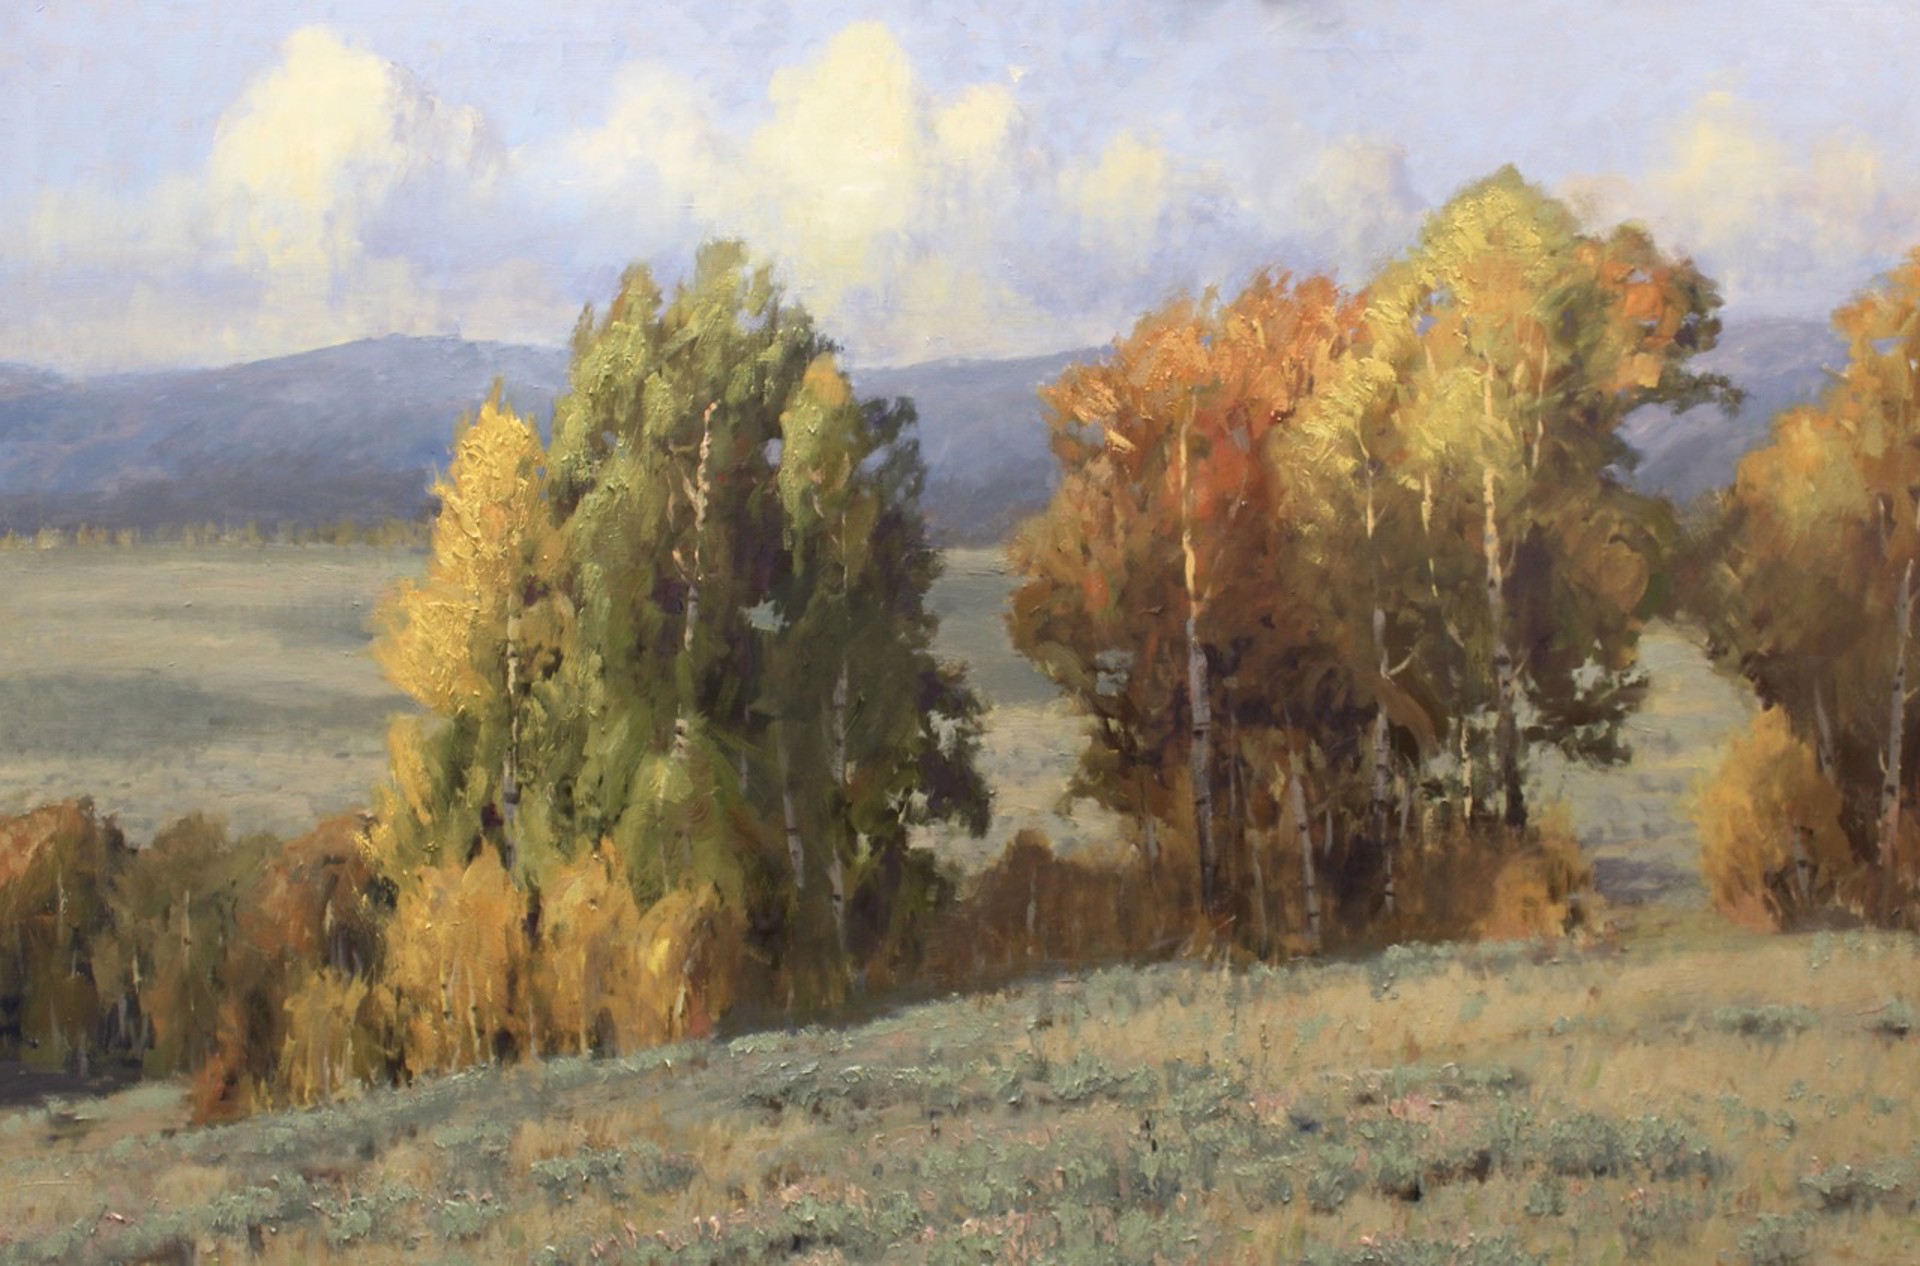 Autumn Splendor by Roger Dale Brown, OPAM, AISM, ASMA, ARCLM